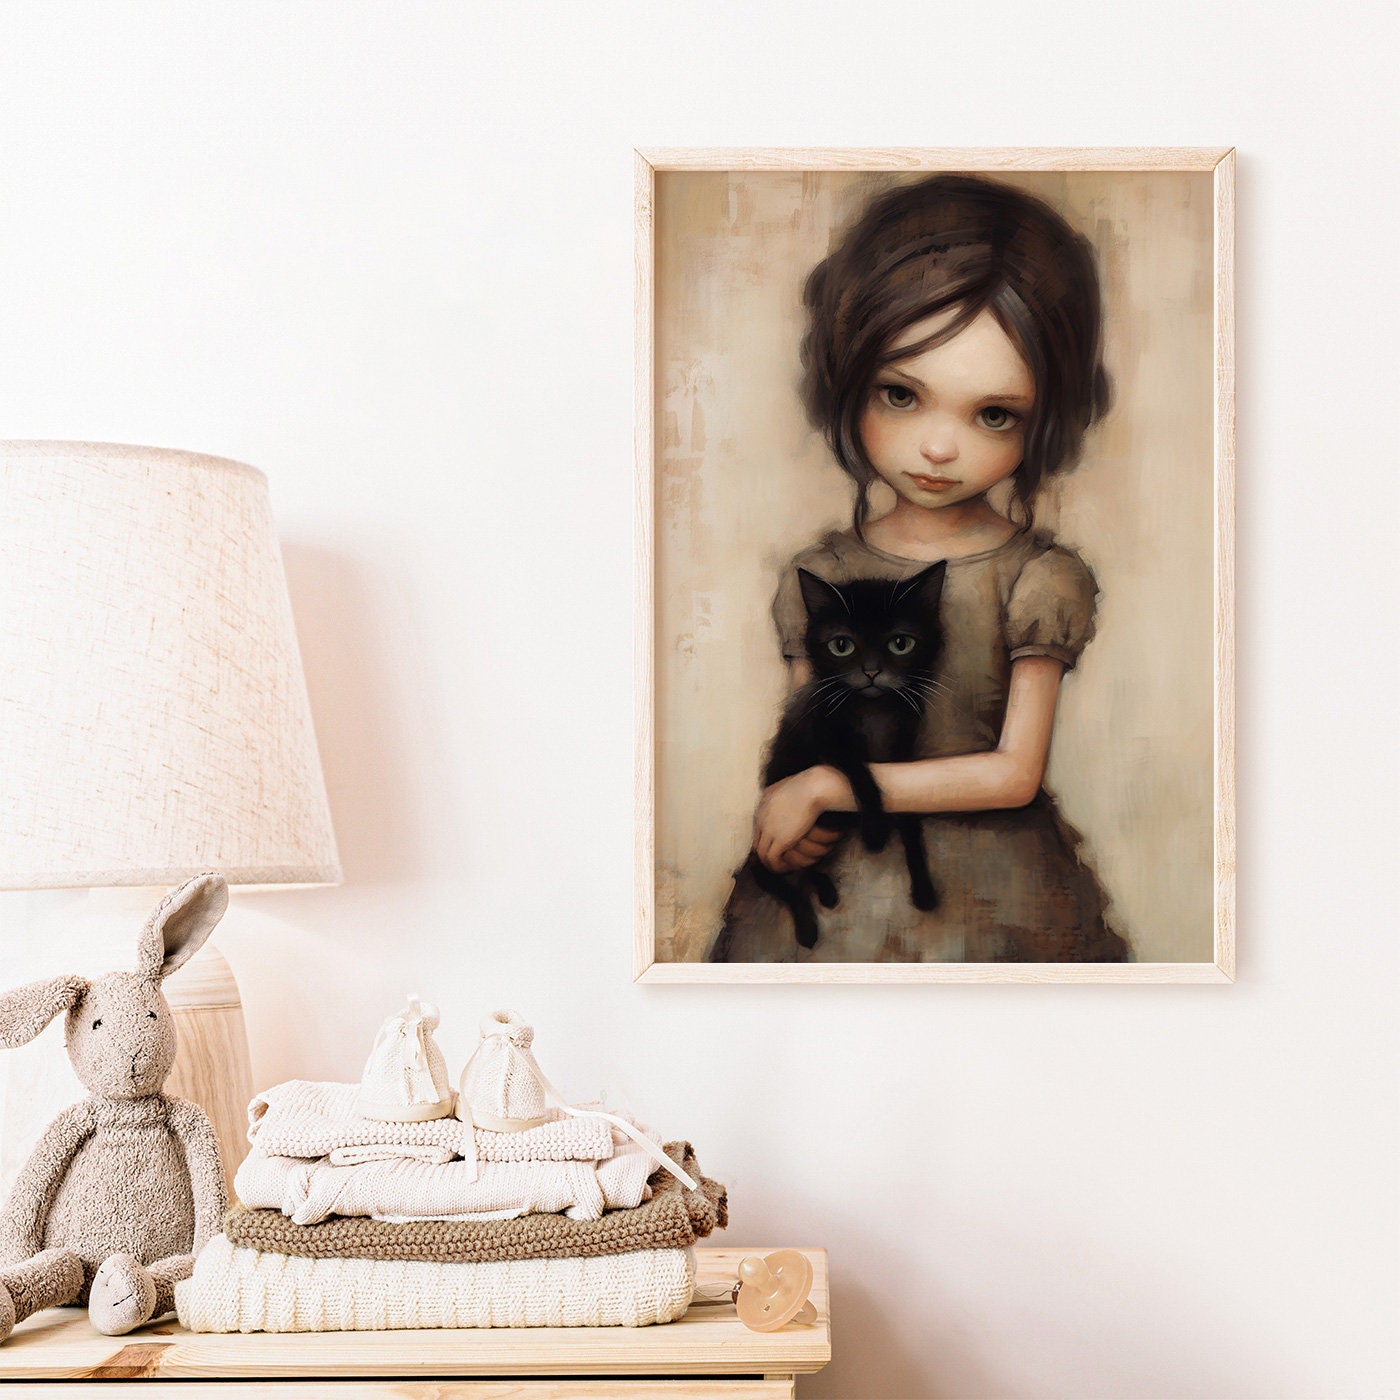 Vintage Nursery Wall Art, Cat Nursery Print, Little Girl with Black Cat, Whimsigoth Decor, Girls Room Decor, Digital Printable Art for Girls